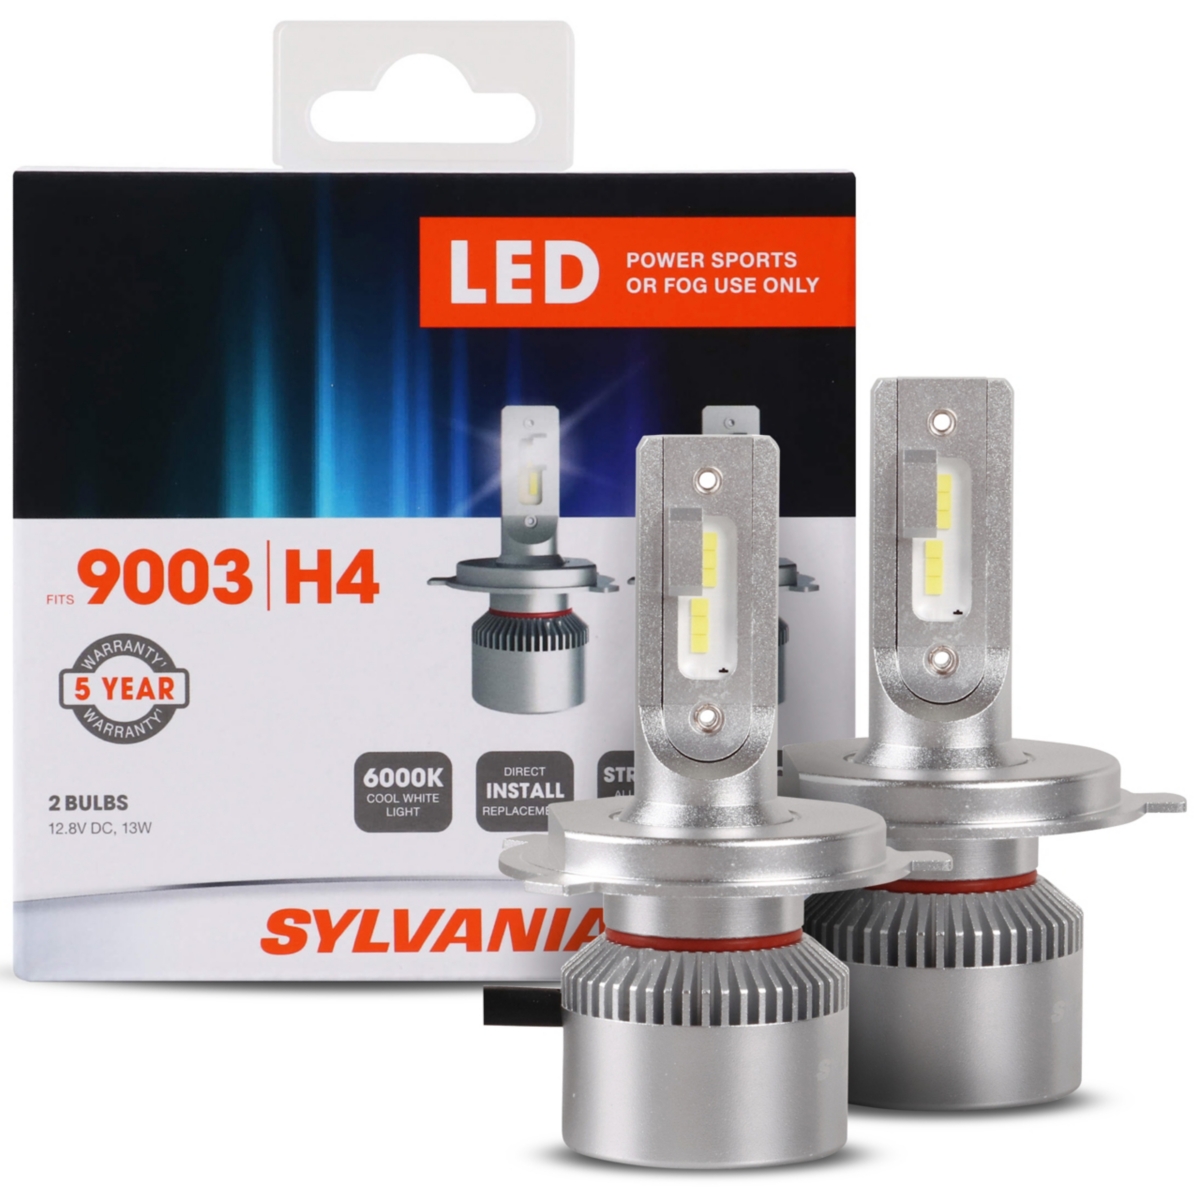 Sylvania 9003 H4 Led Powersport Headlight Bulbs for Off-Road Use or Fog Lights - 2 Pack